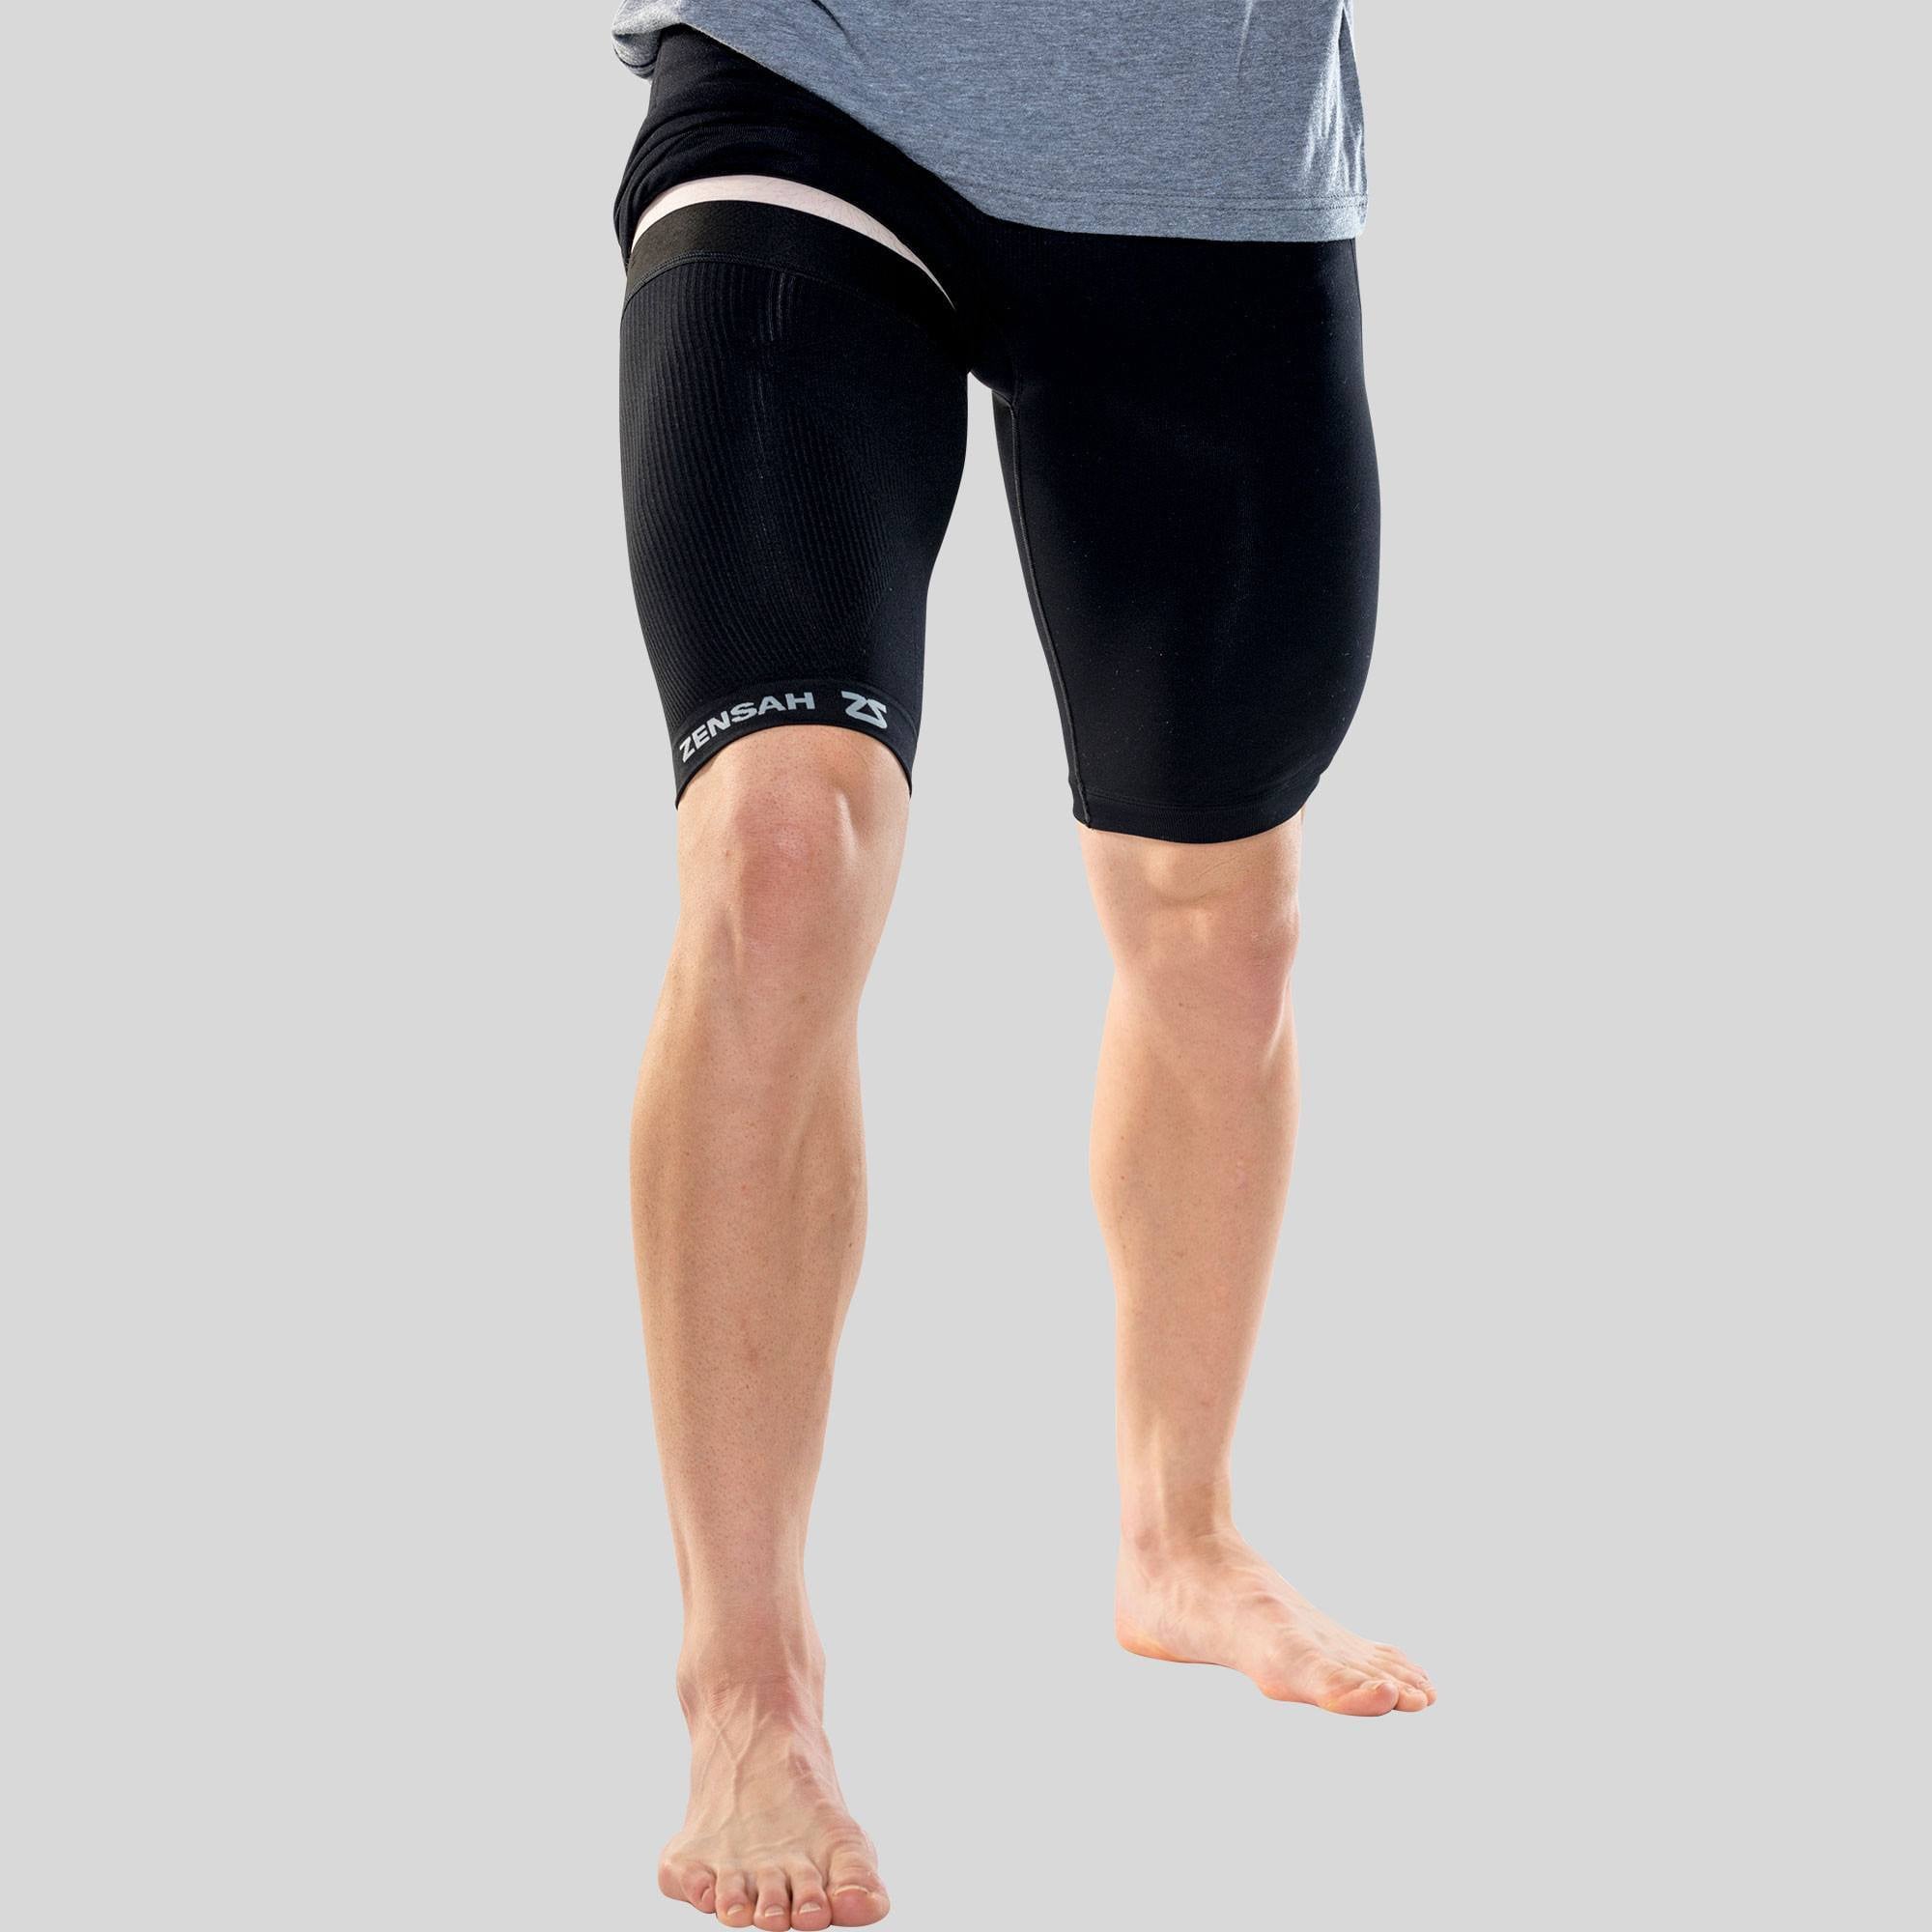  CrushN'Flex Thigh Compression Sleeves (Pair) – Thigh